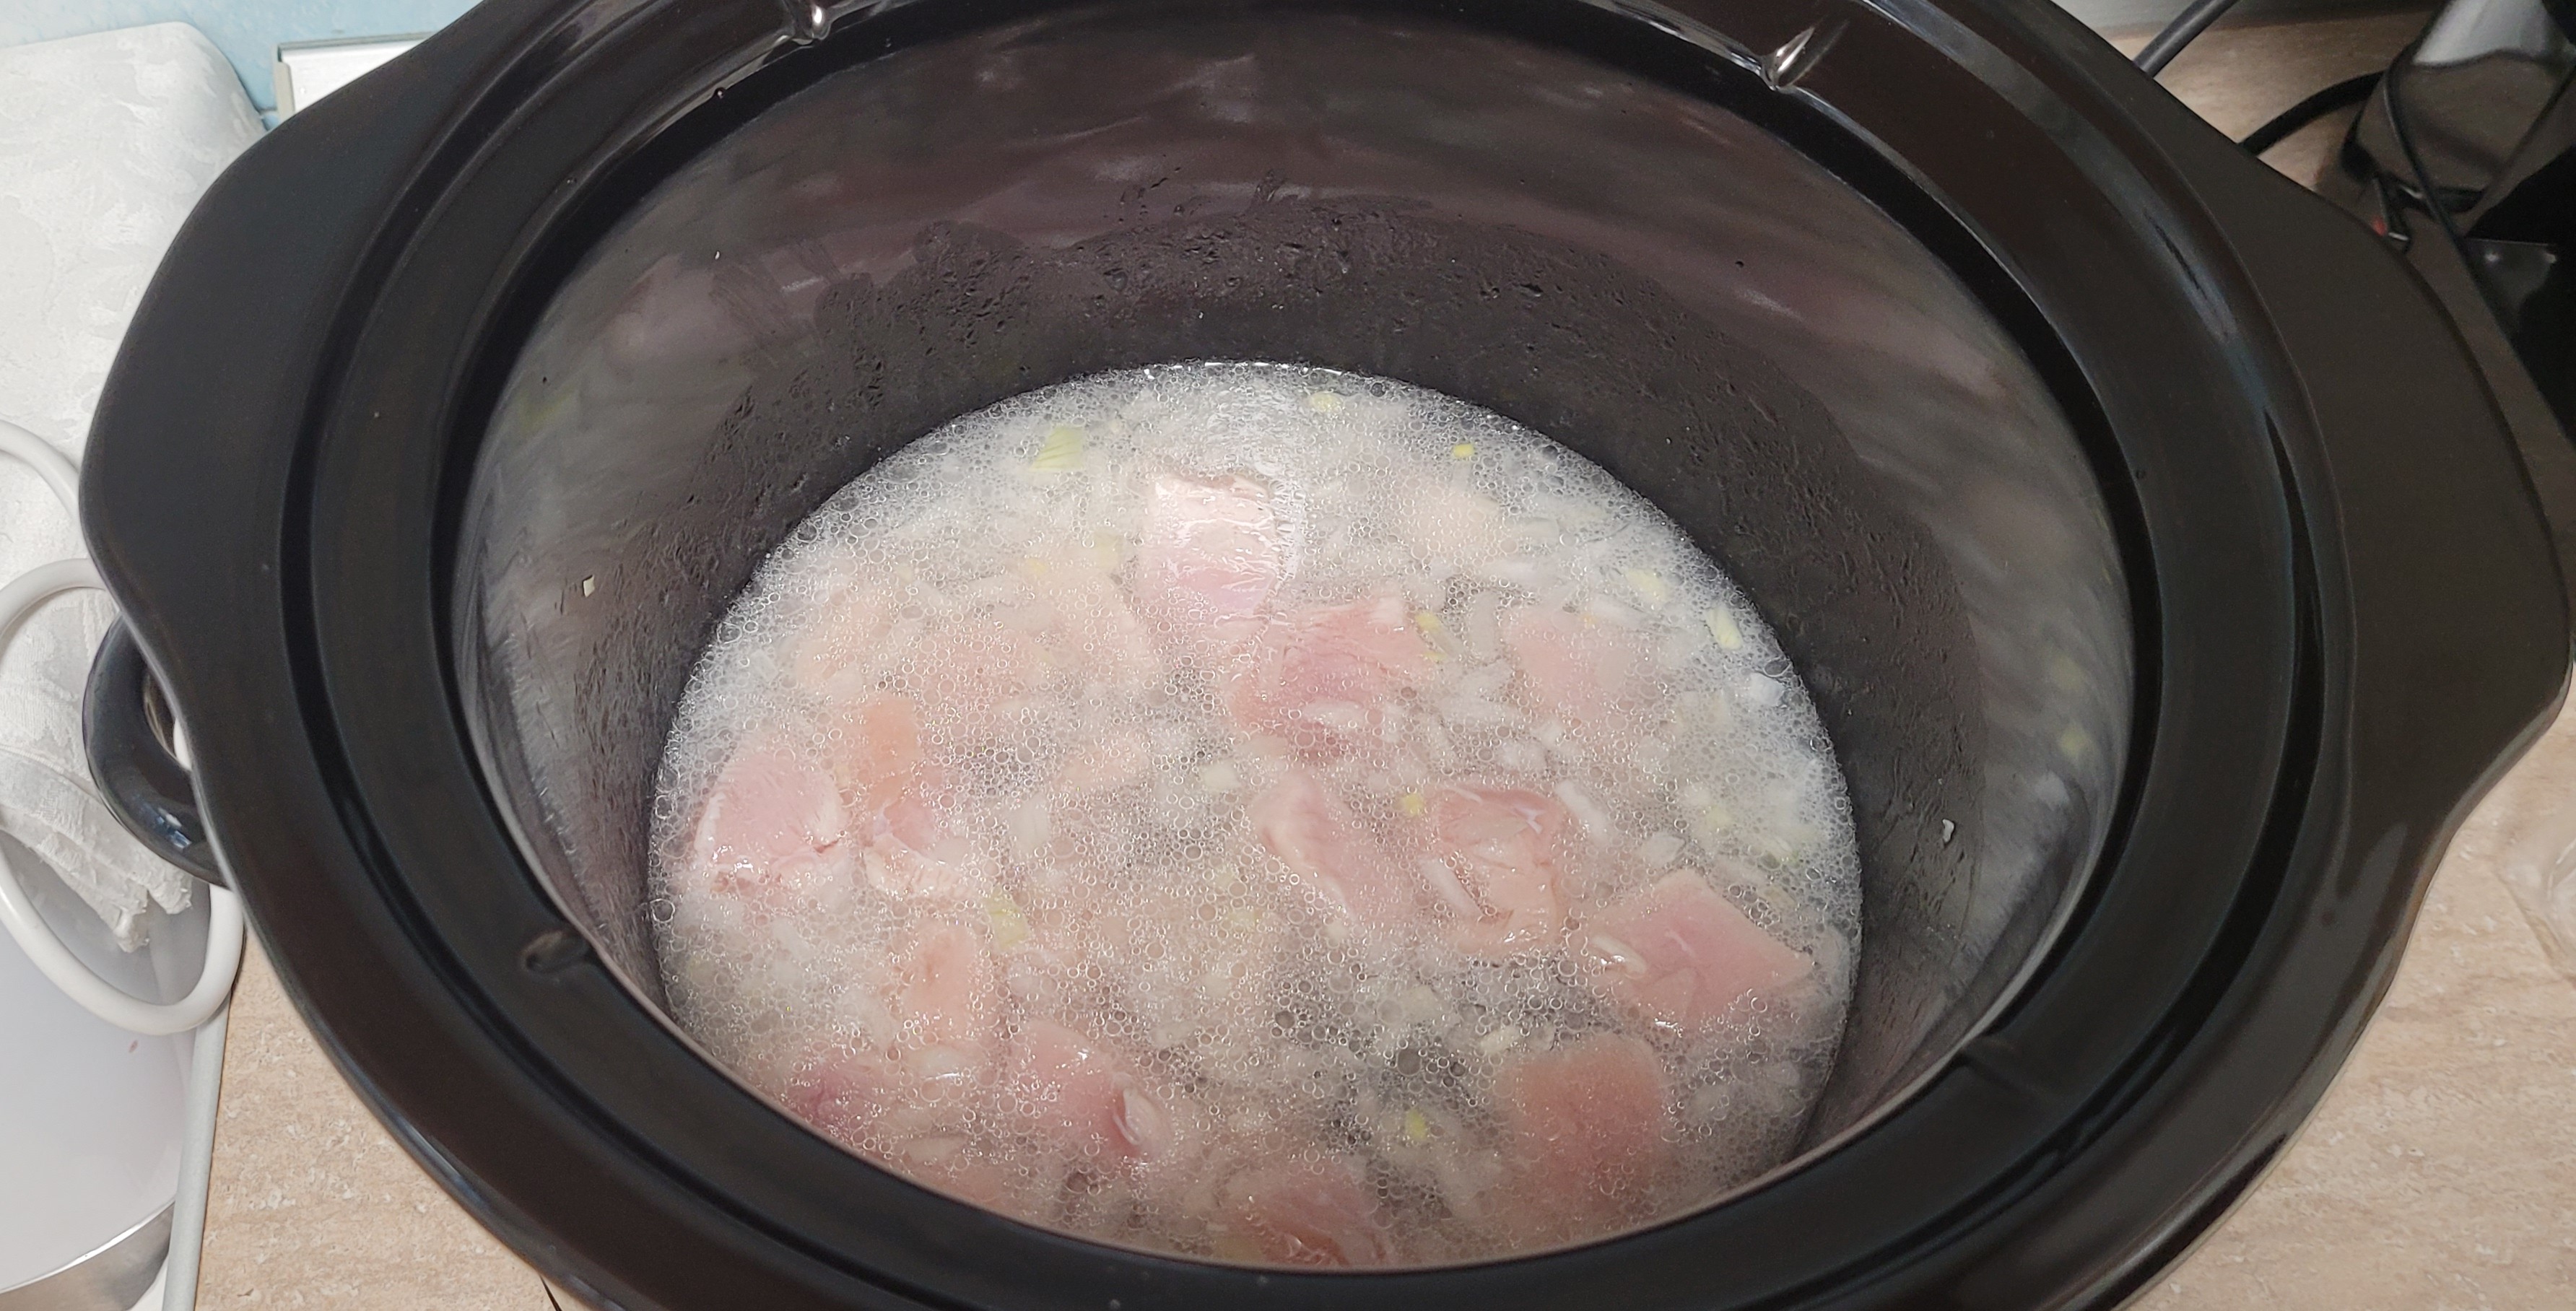 Tocanita de pui cu ardei copt la slow cooker Crock Pot